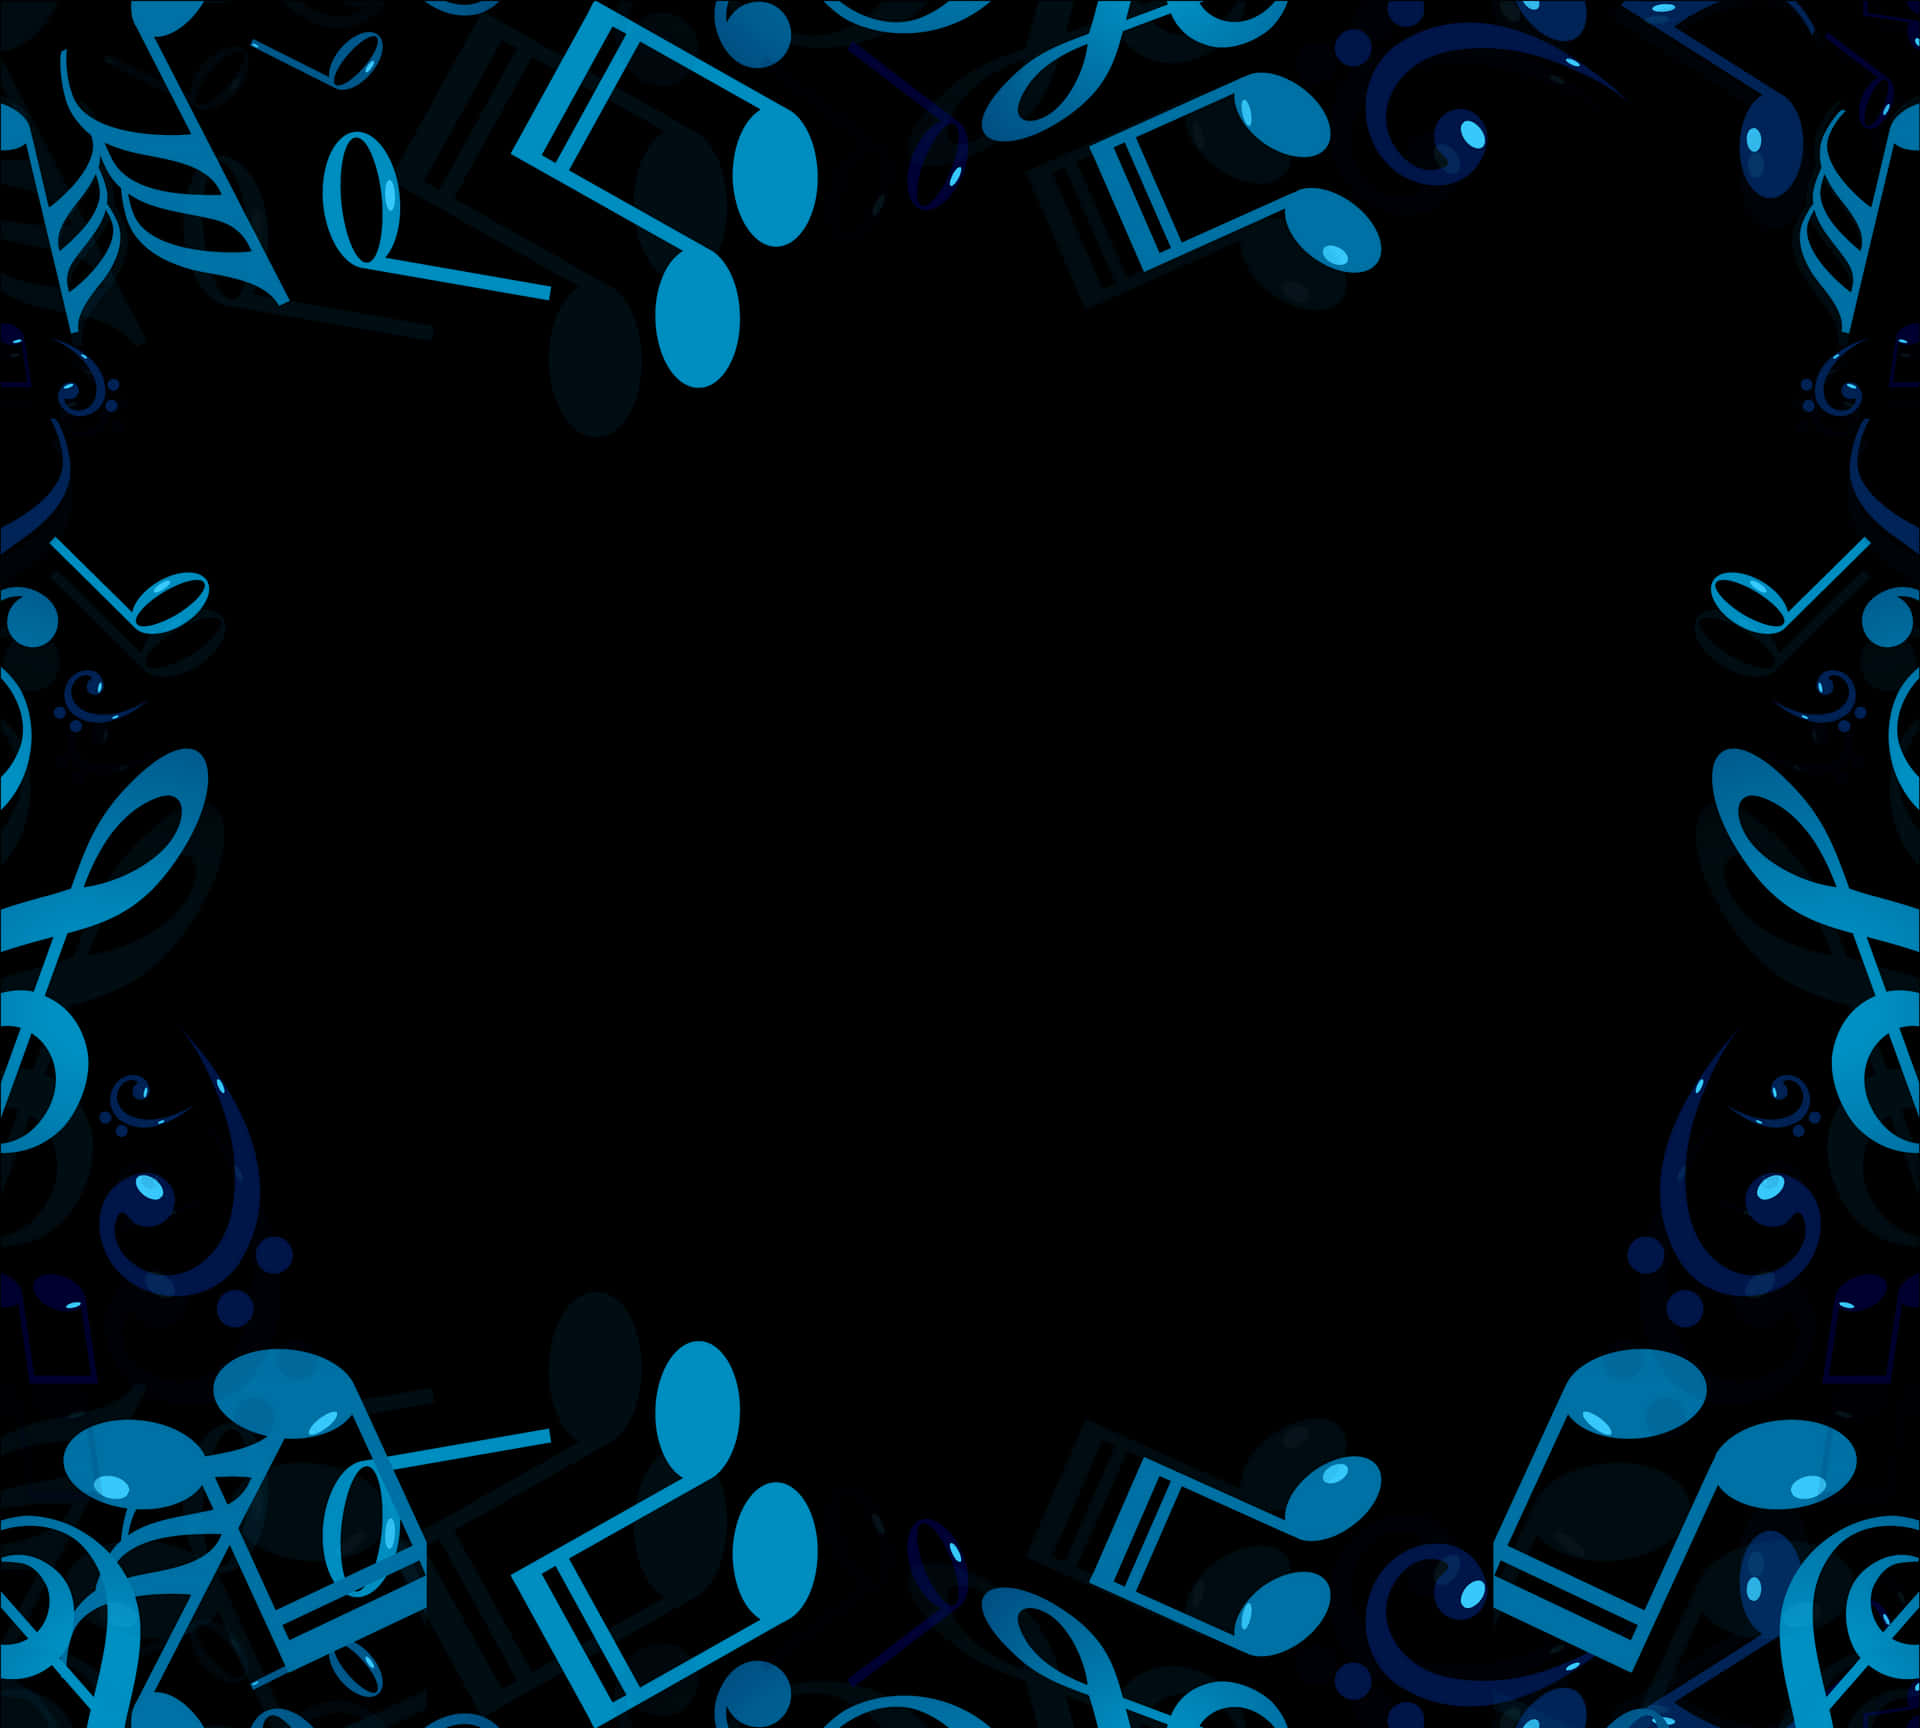 Musical Notes Frame Background PNG image